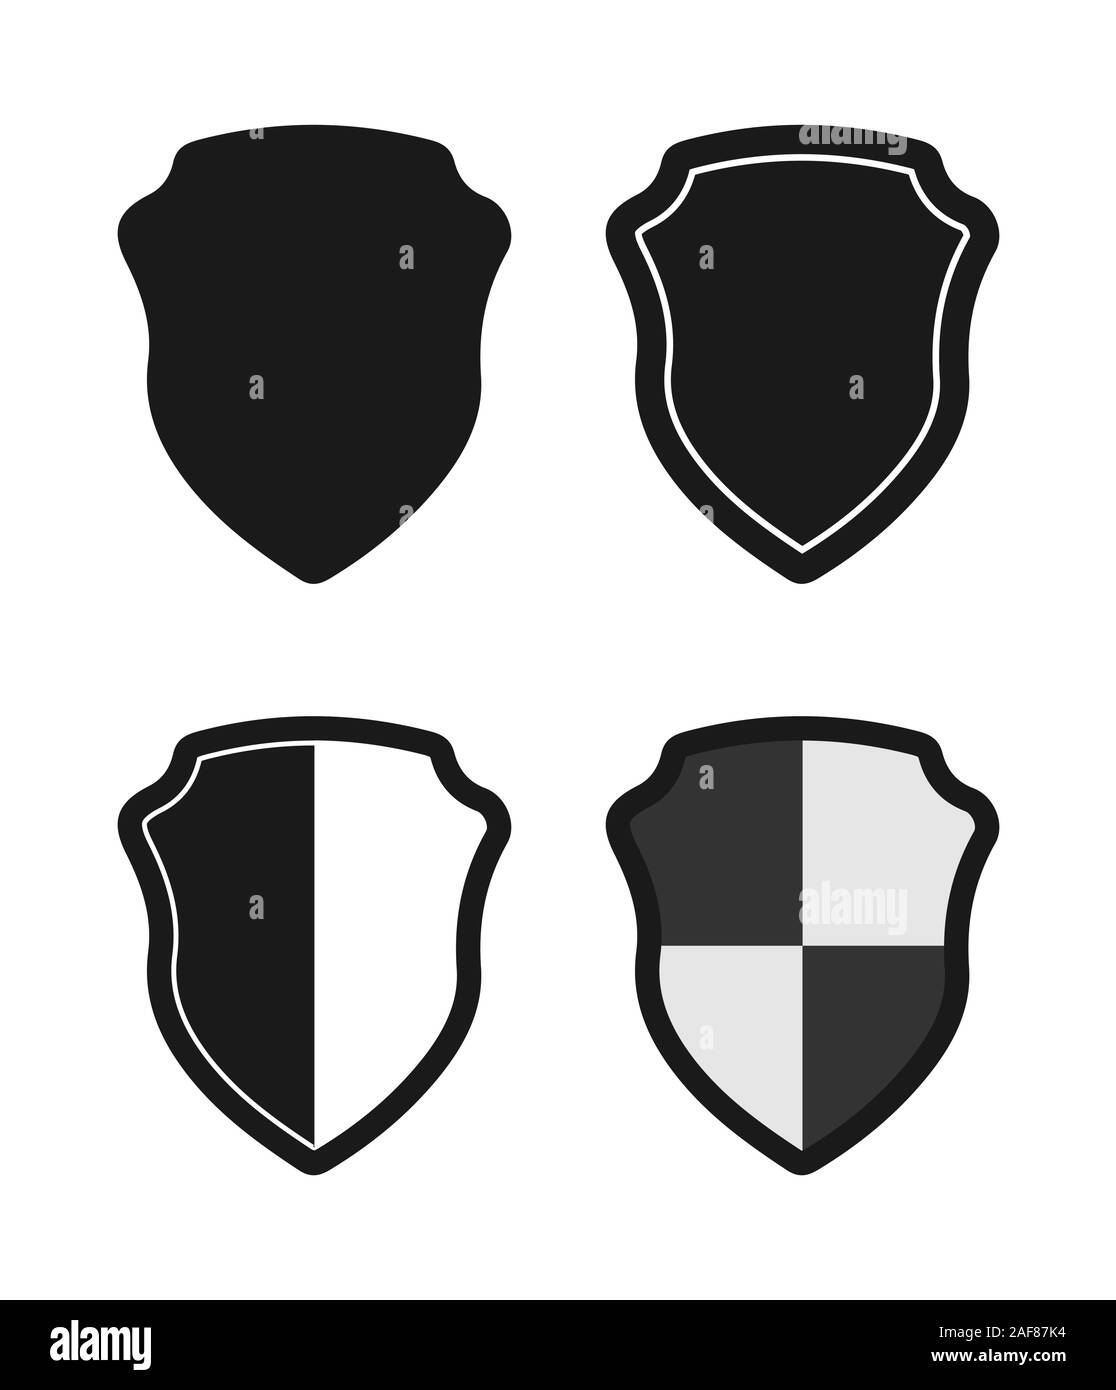 Heraldic vintage shield icon set. Flat style isolated on white background. Stock Vector